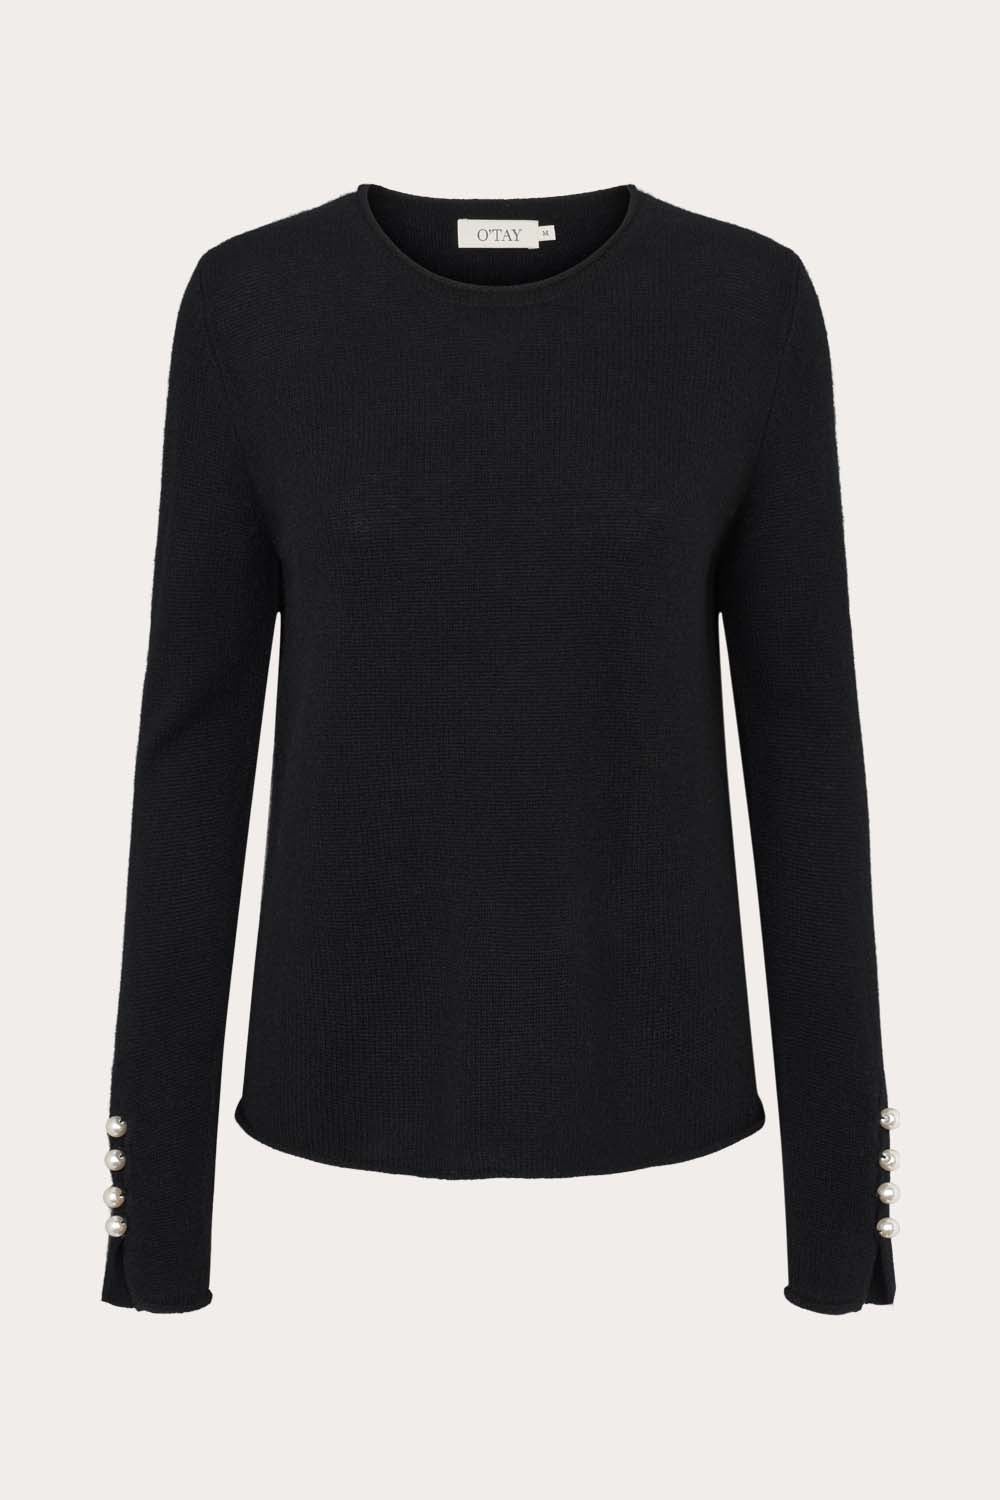 O'TAY Abbelone Sweater Bluser Black